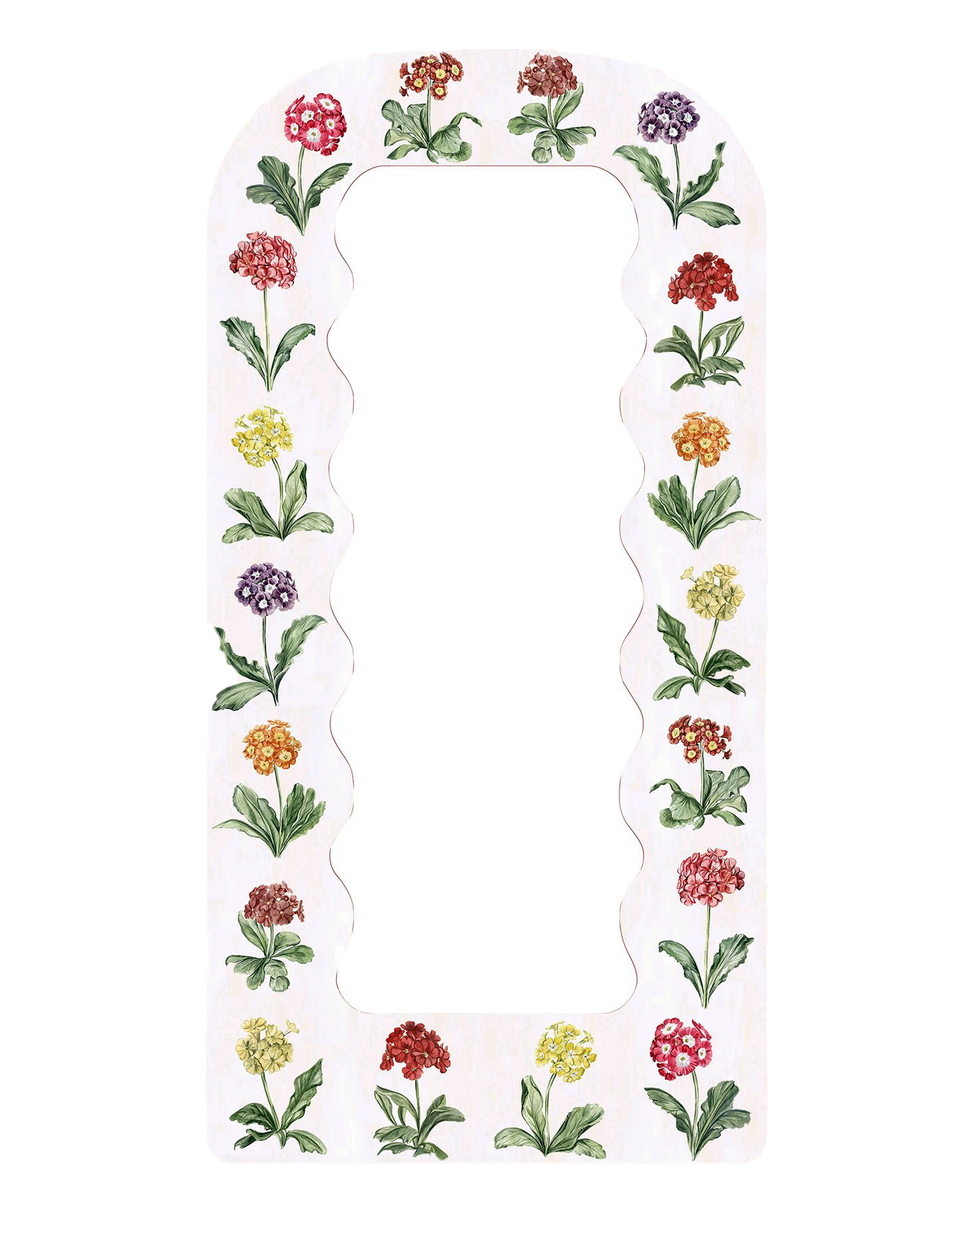 riley sheehey x fleur home floral mirrors